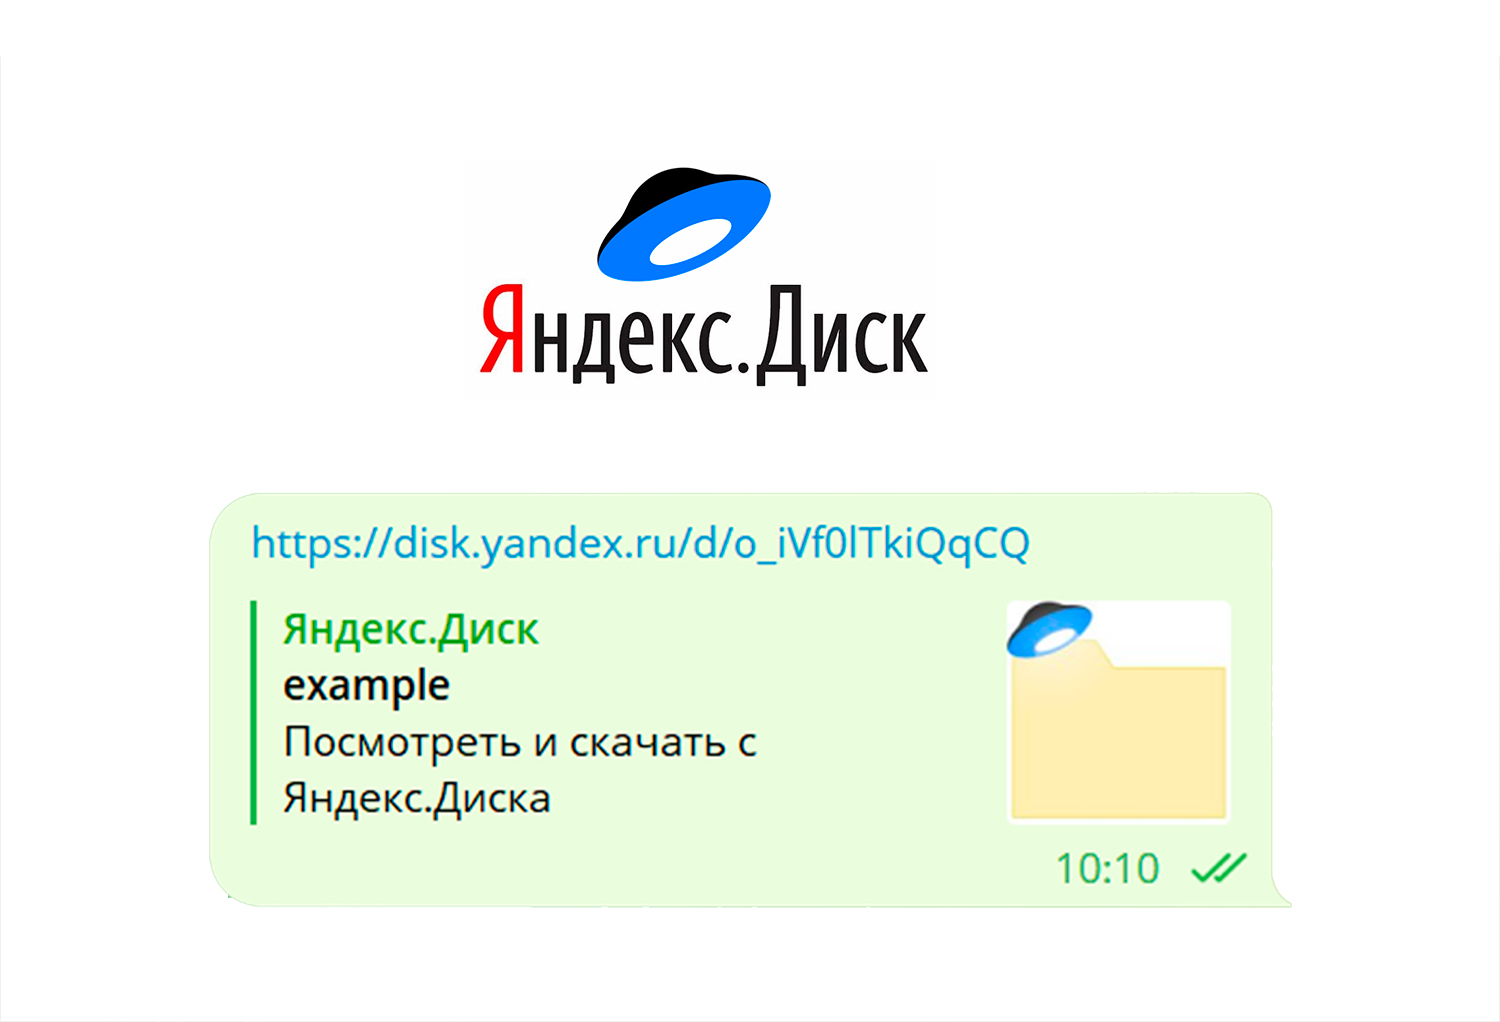 Изменения в настройке отправки на Яндекс.Диск